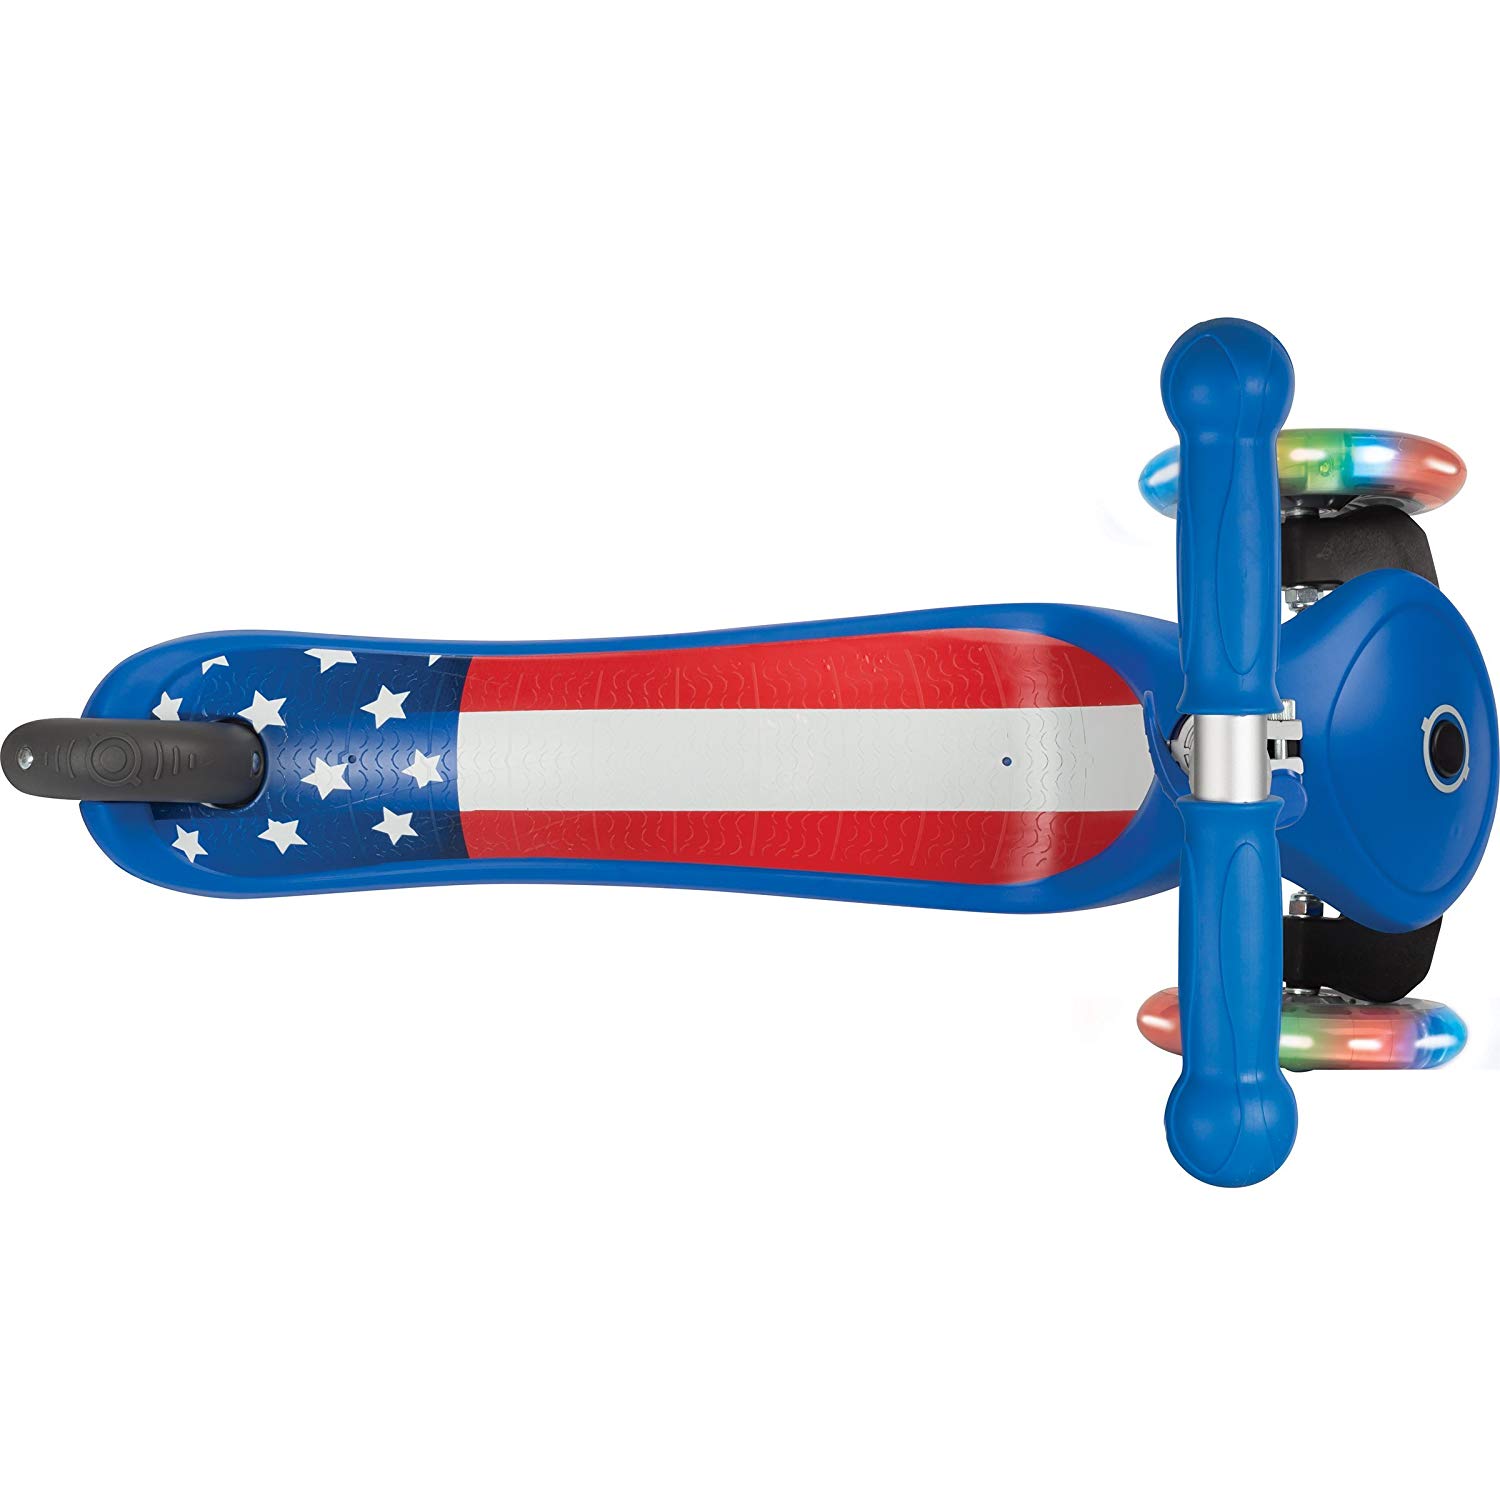 Monopattino American flag fantasy navy blue